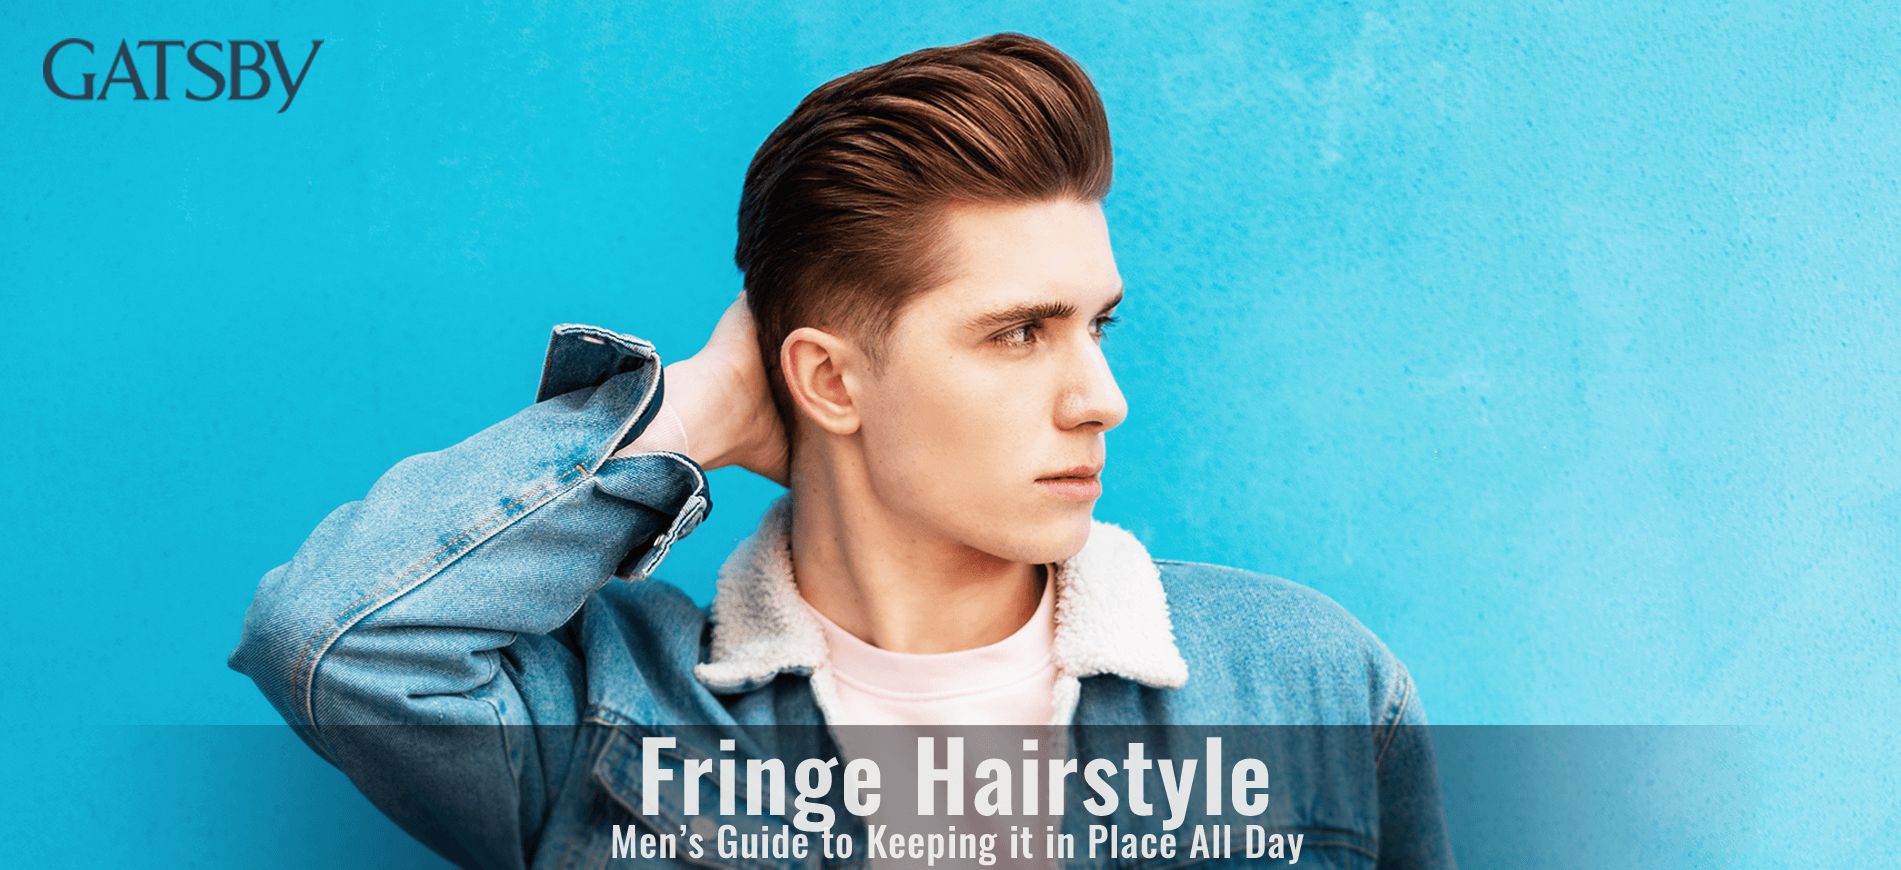 14 Fringe Haircut Ideas For Men  EntertainmentMesh